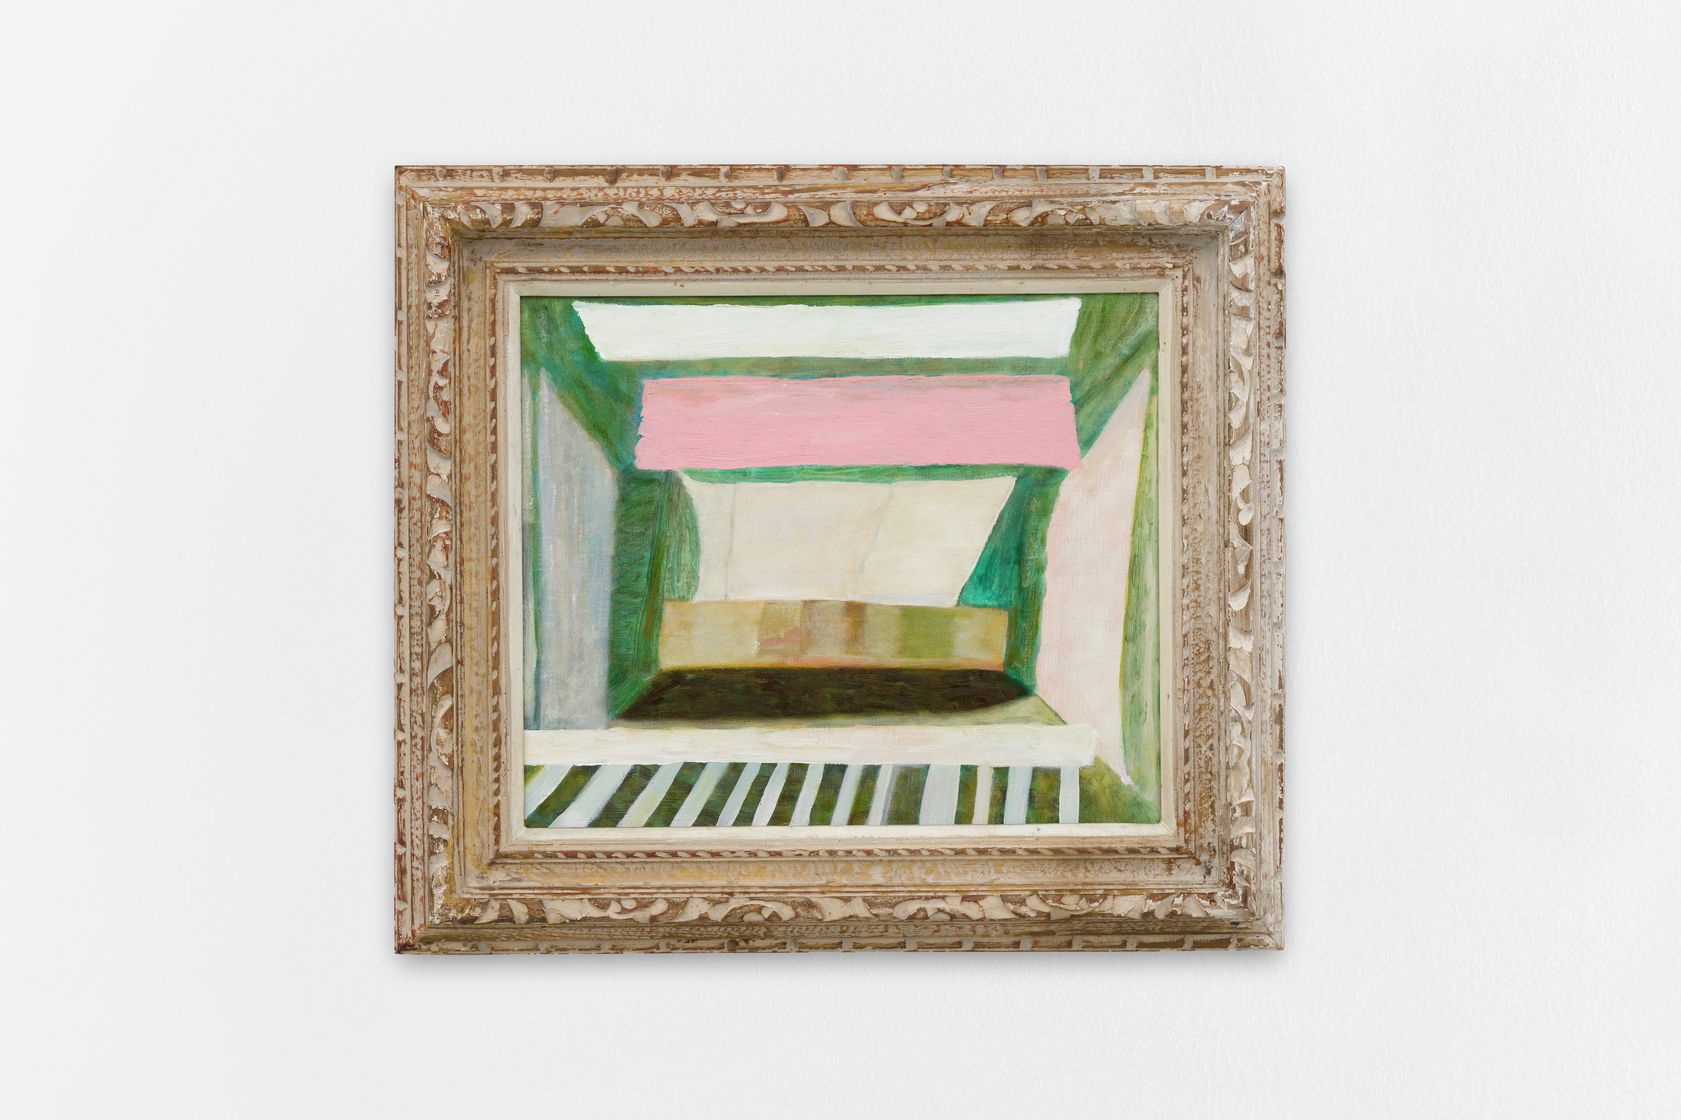 Hiroshi Sugito, Untitled, 2022 Huile sur toile38 × 45.5 cm / 15  × 17 7/8 in. | 55.5 × 62.5 cm / 21 7/8 × 24 5/8 in. (encadré/framed)